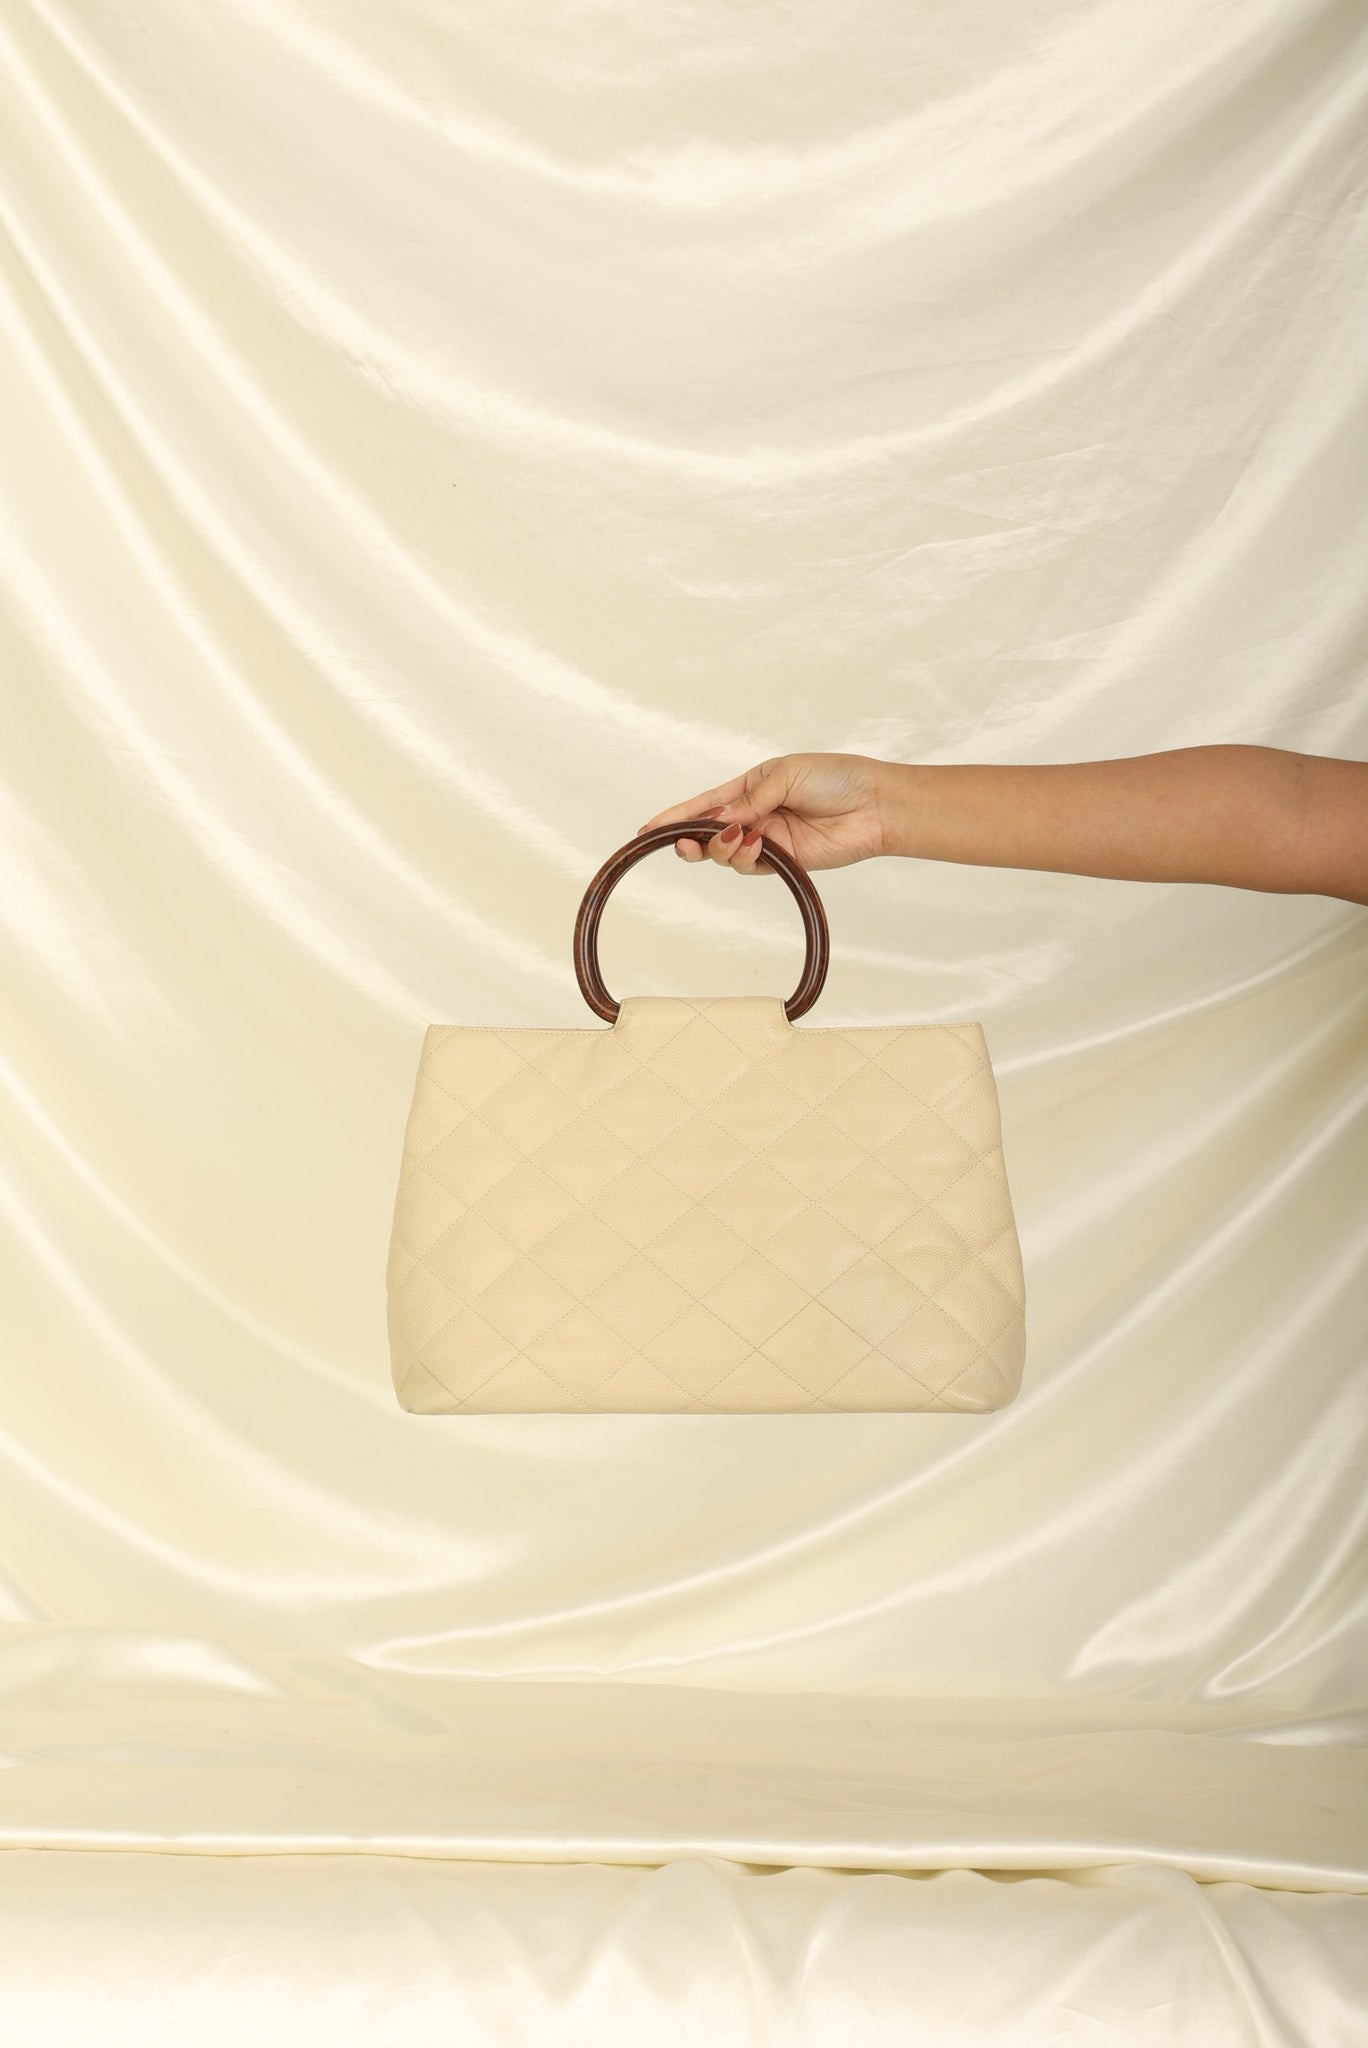 Chanel Quilted Tortoiseshell Handle Bag